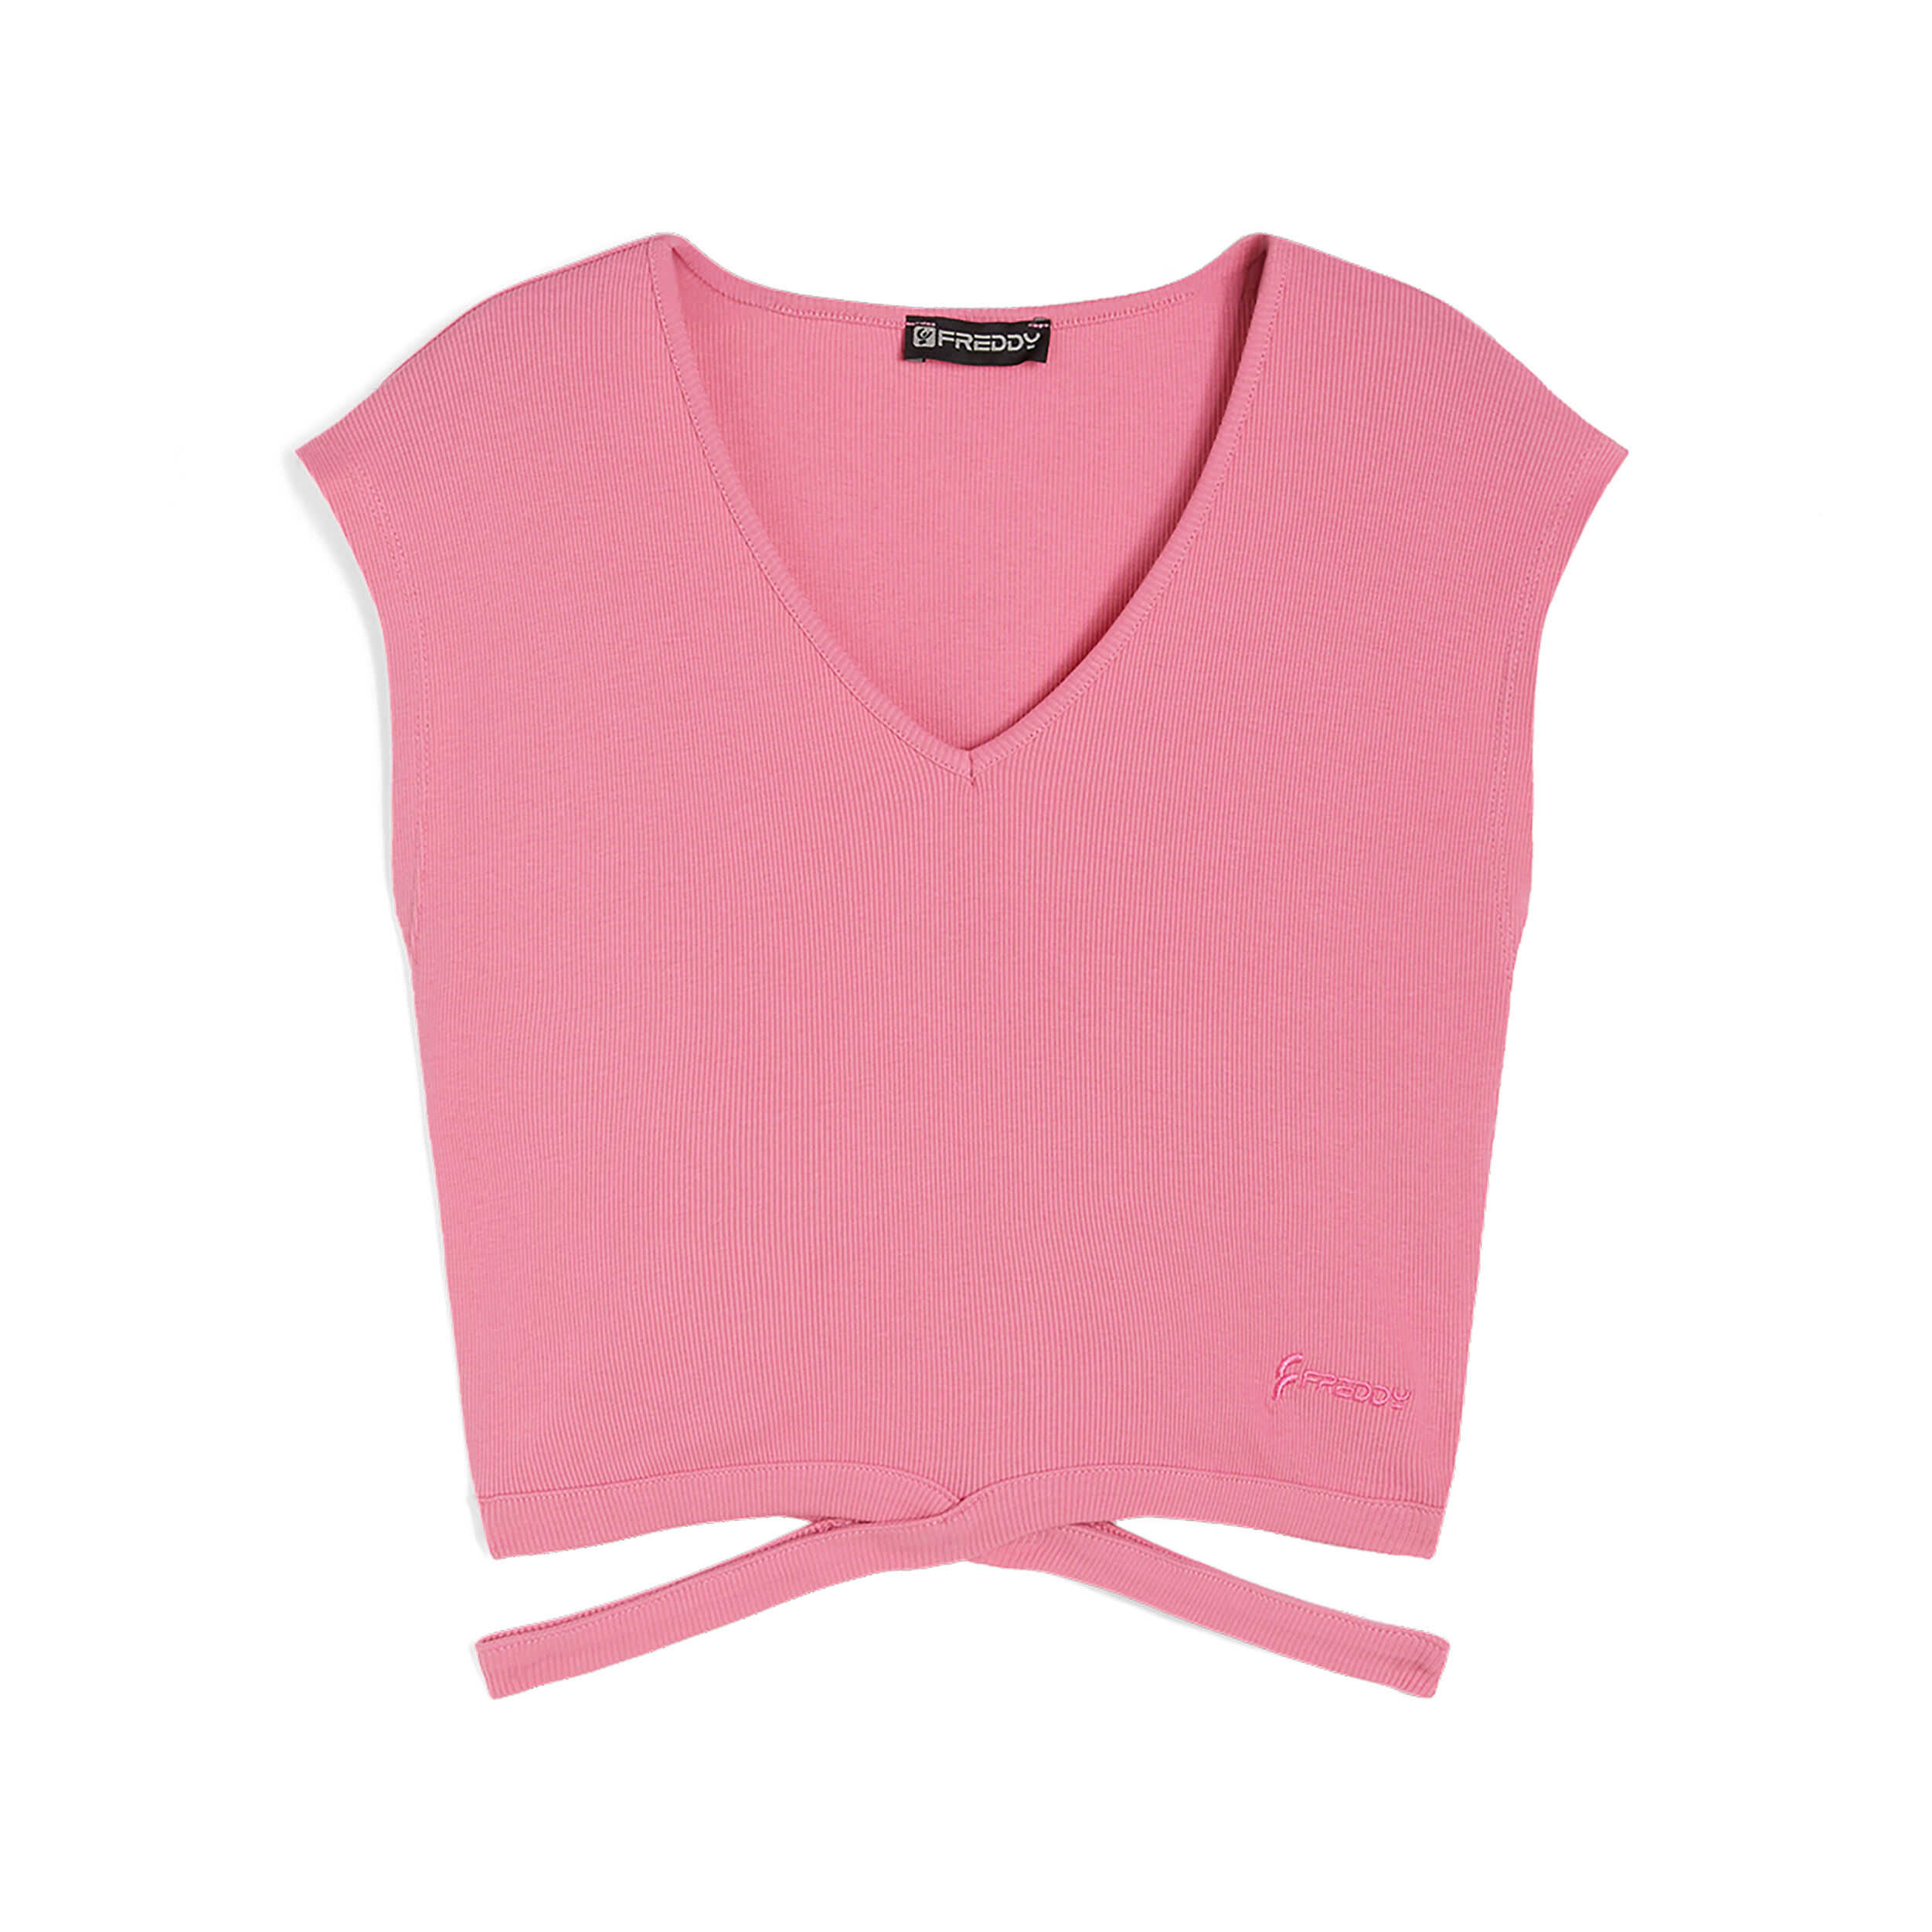 Freddy T-shirt slim fit in costina con gioco di incroci sul fondo Pink Carnation Donna Extra Large